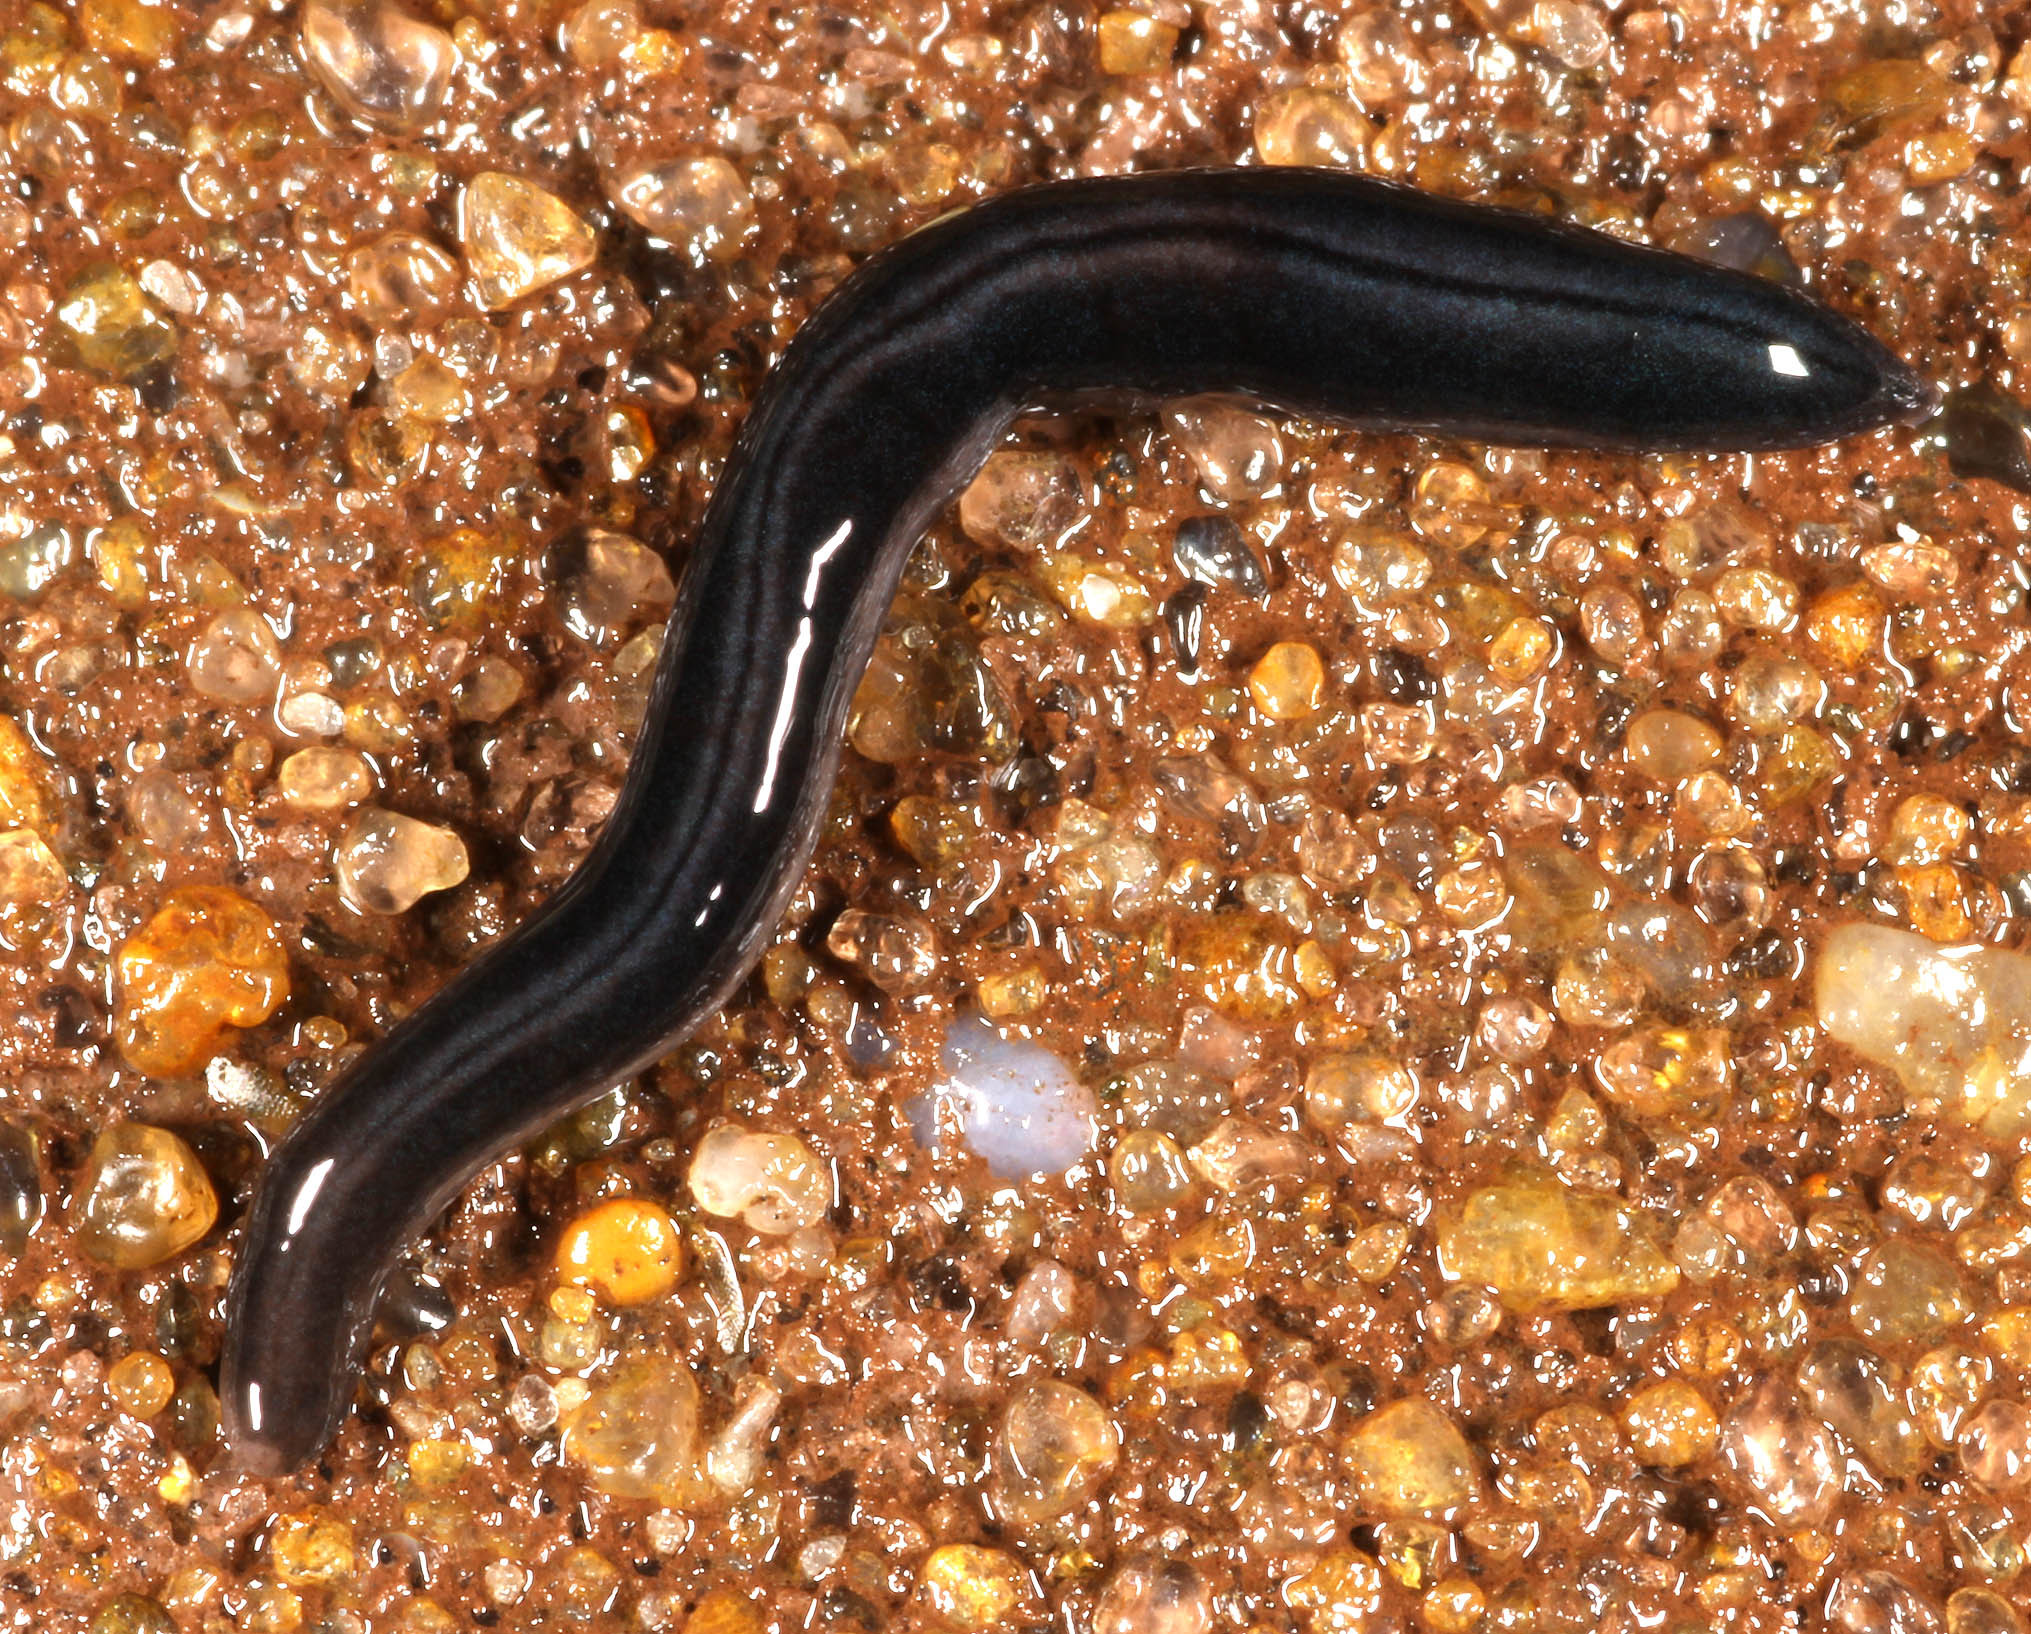 Image of Flatworm